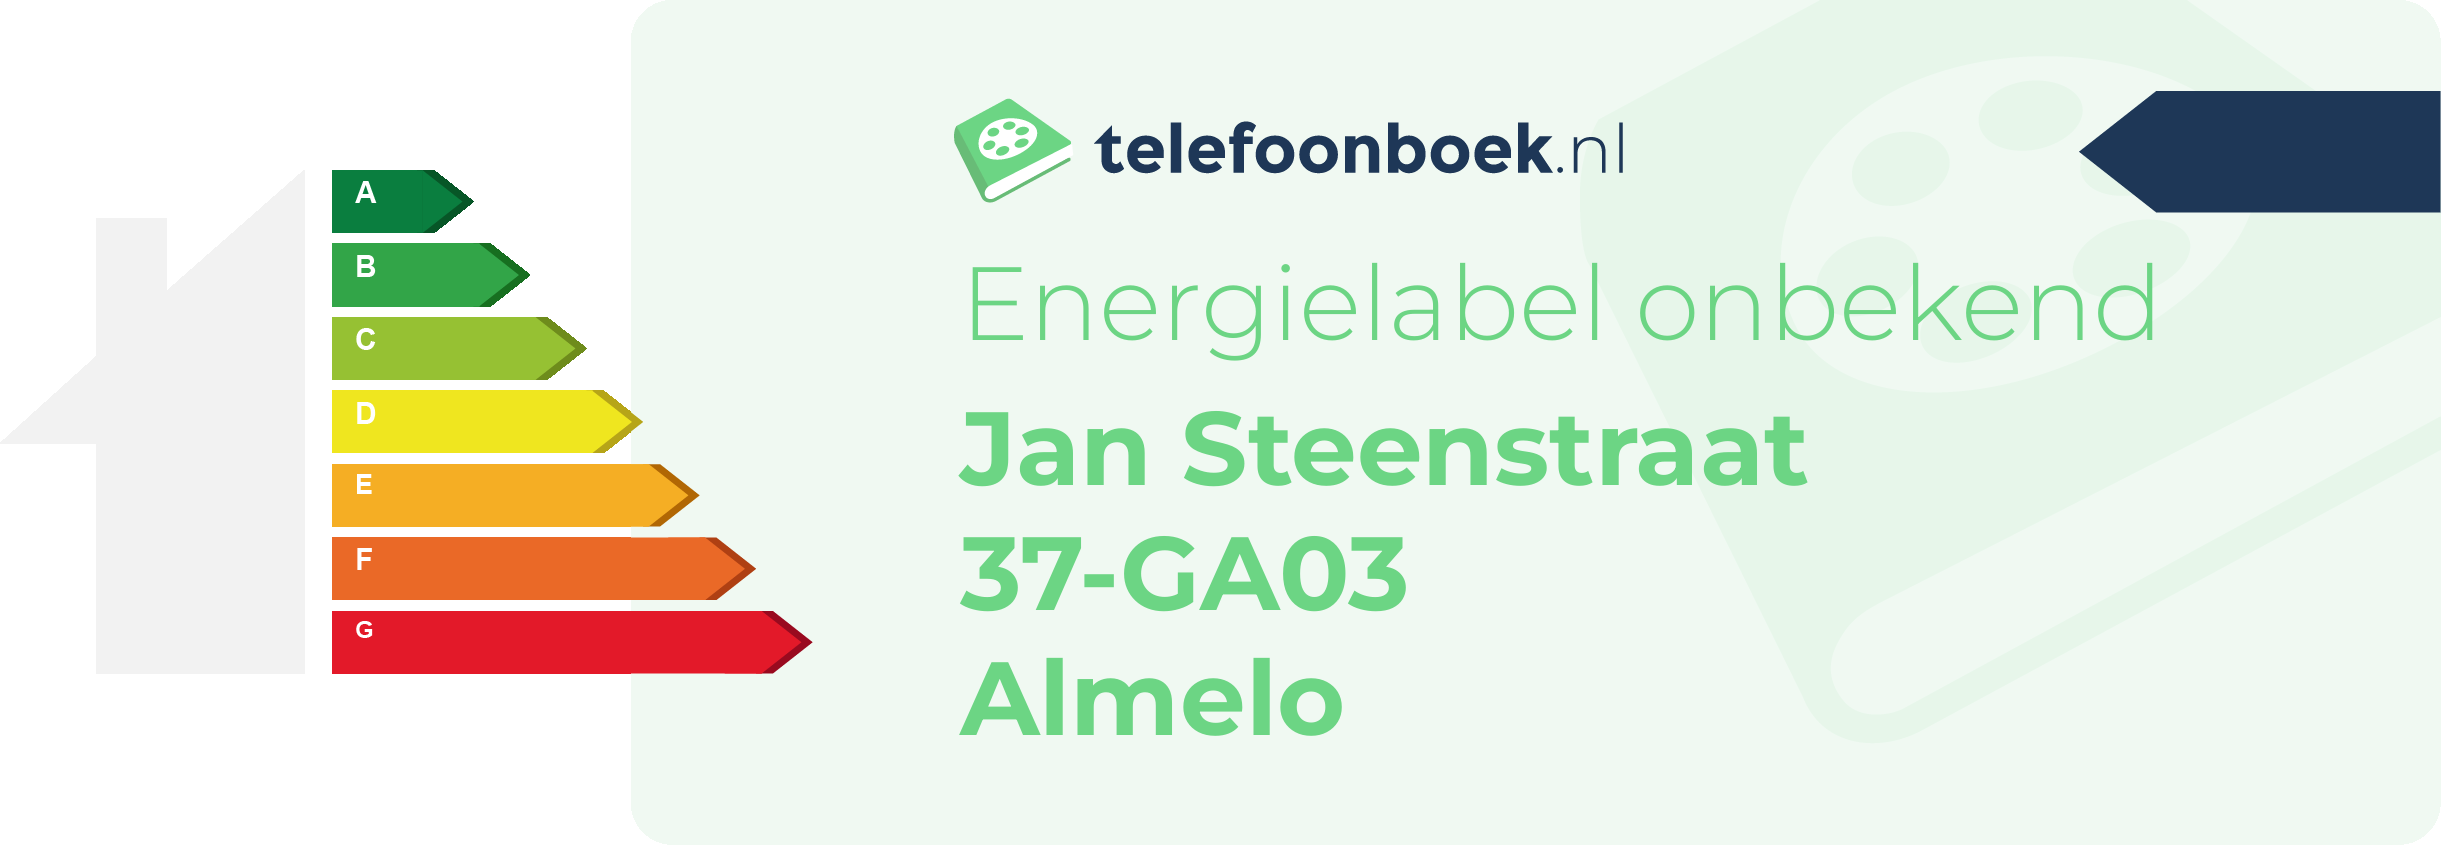 Energielabel Jan Steenstraat 37-GA03 Almelo